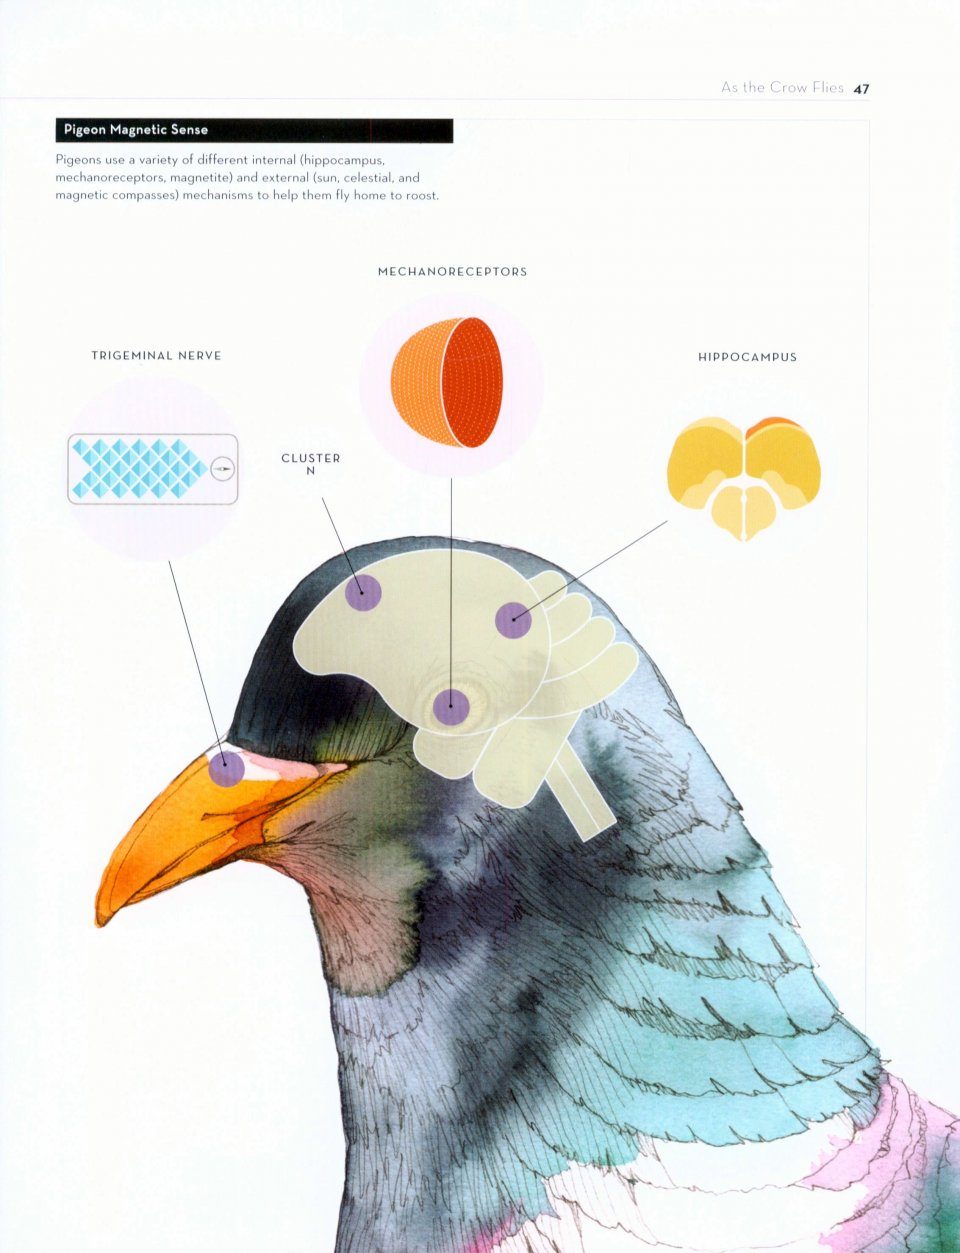 Bird Brain Maps: Study Explores the Neuroecology of Flocking in Birds